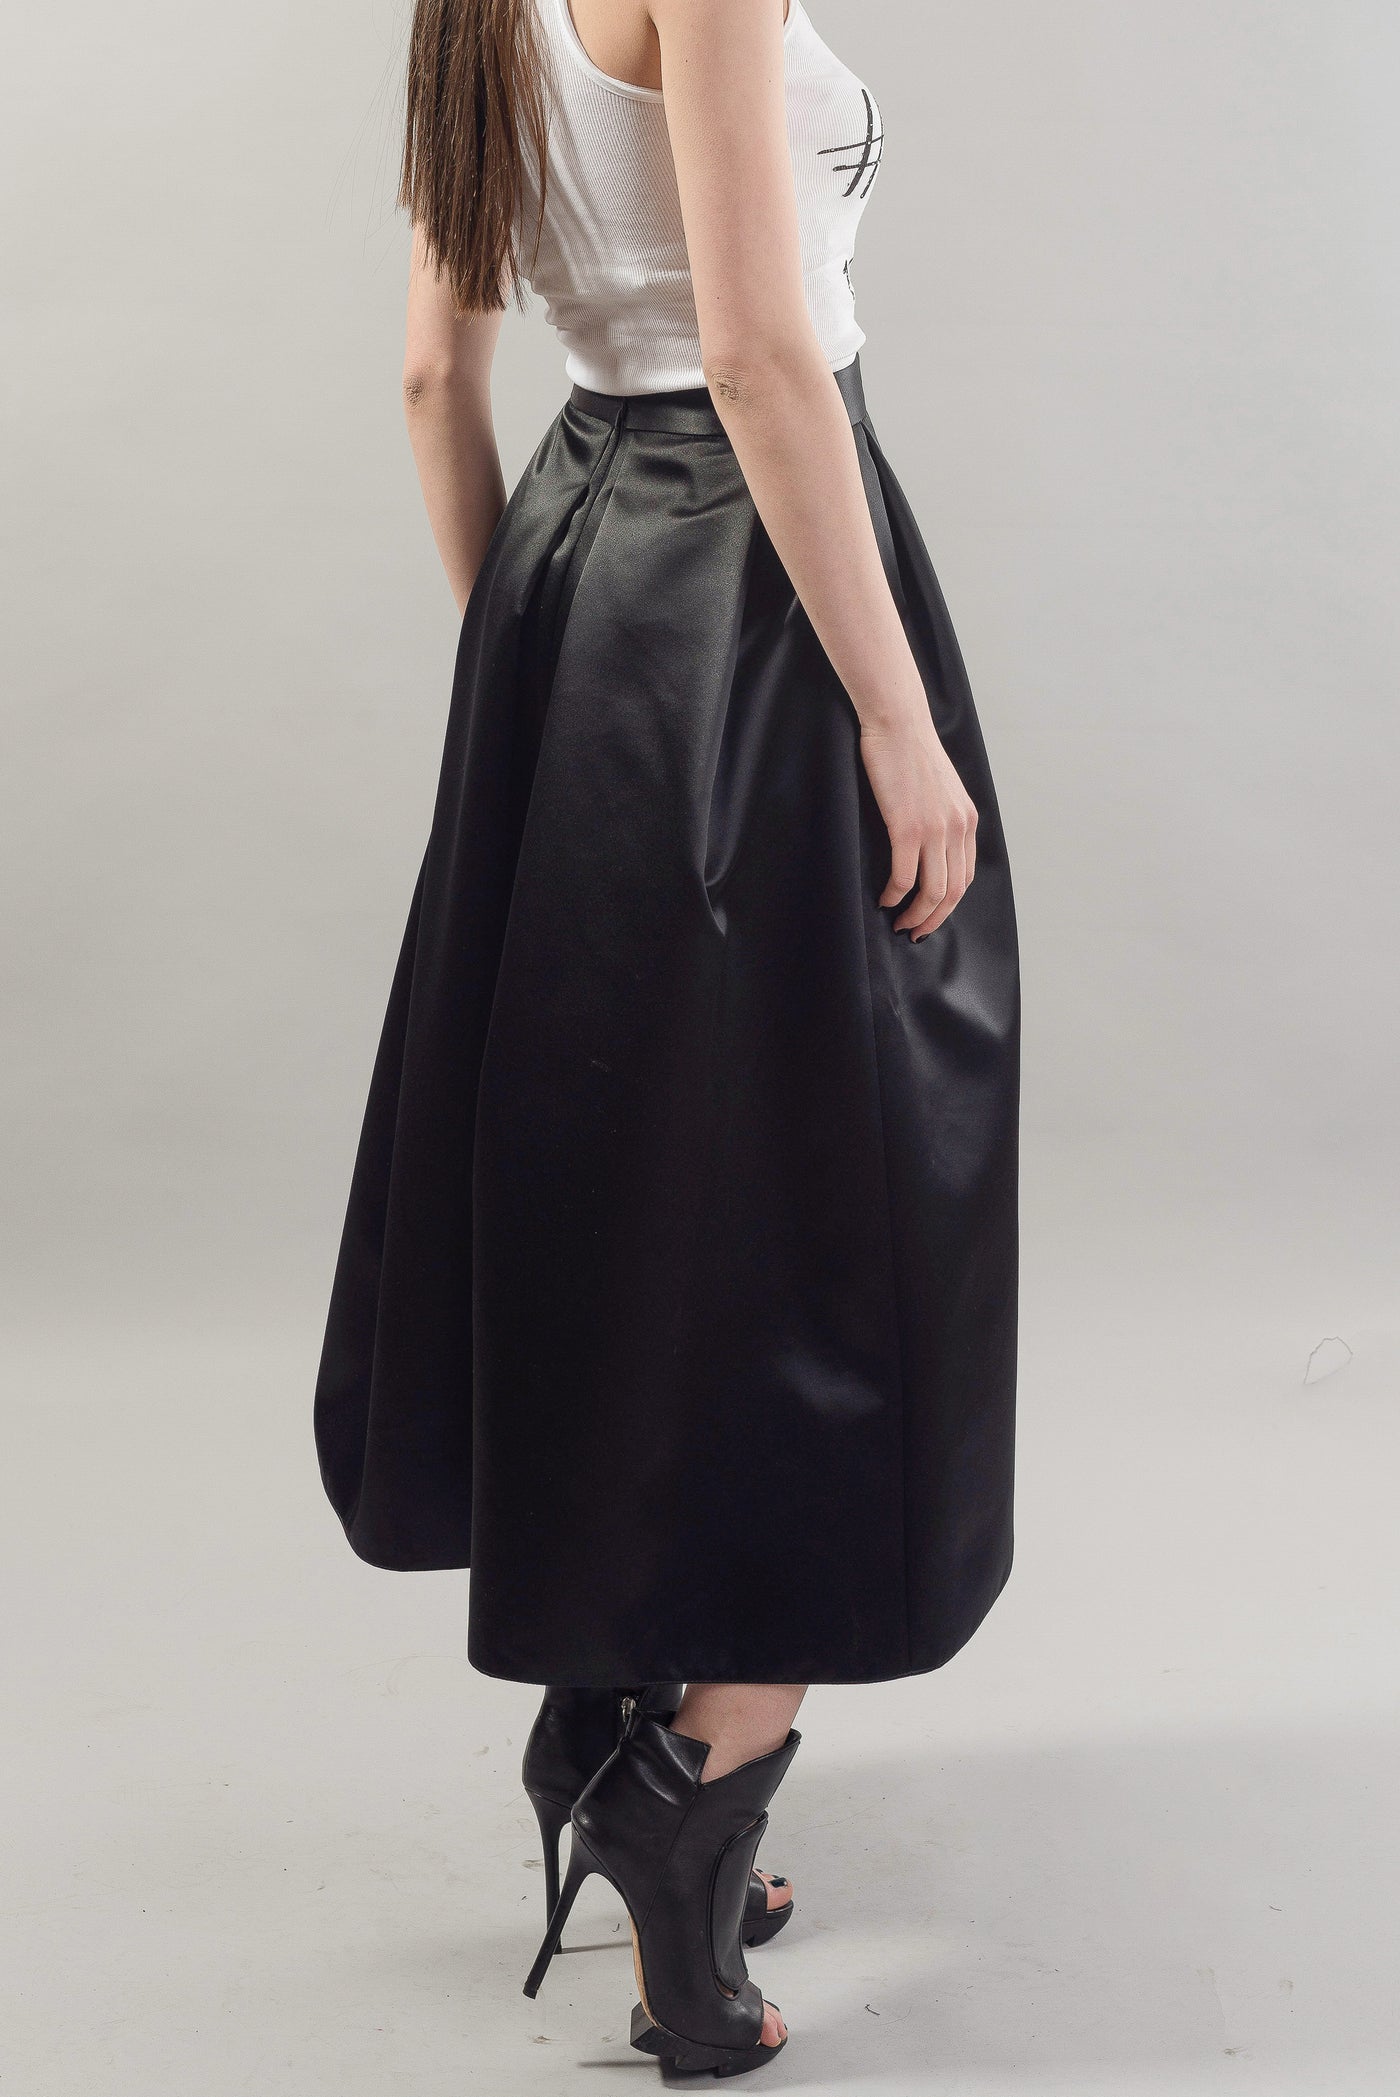 Satin Black Skirt F1818